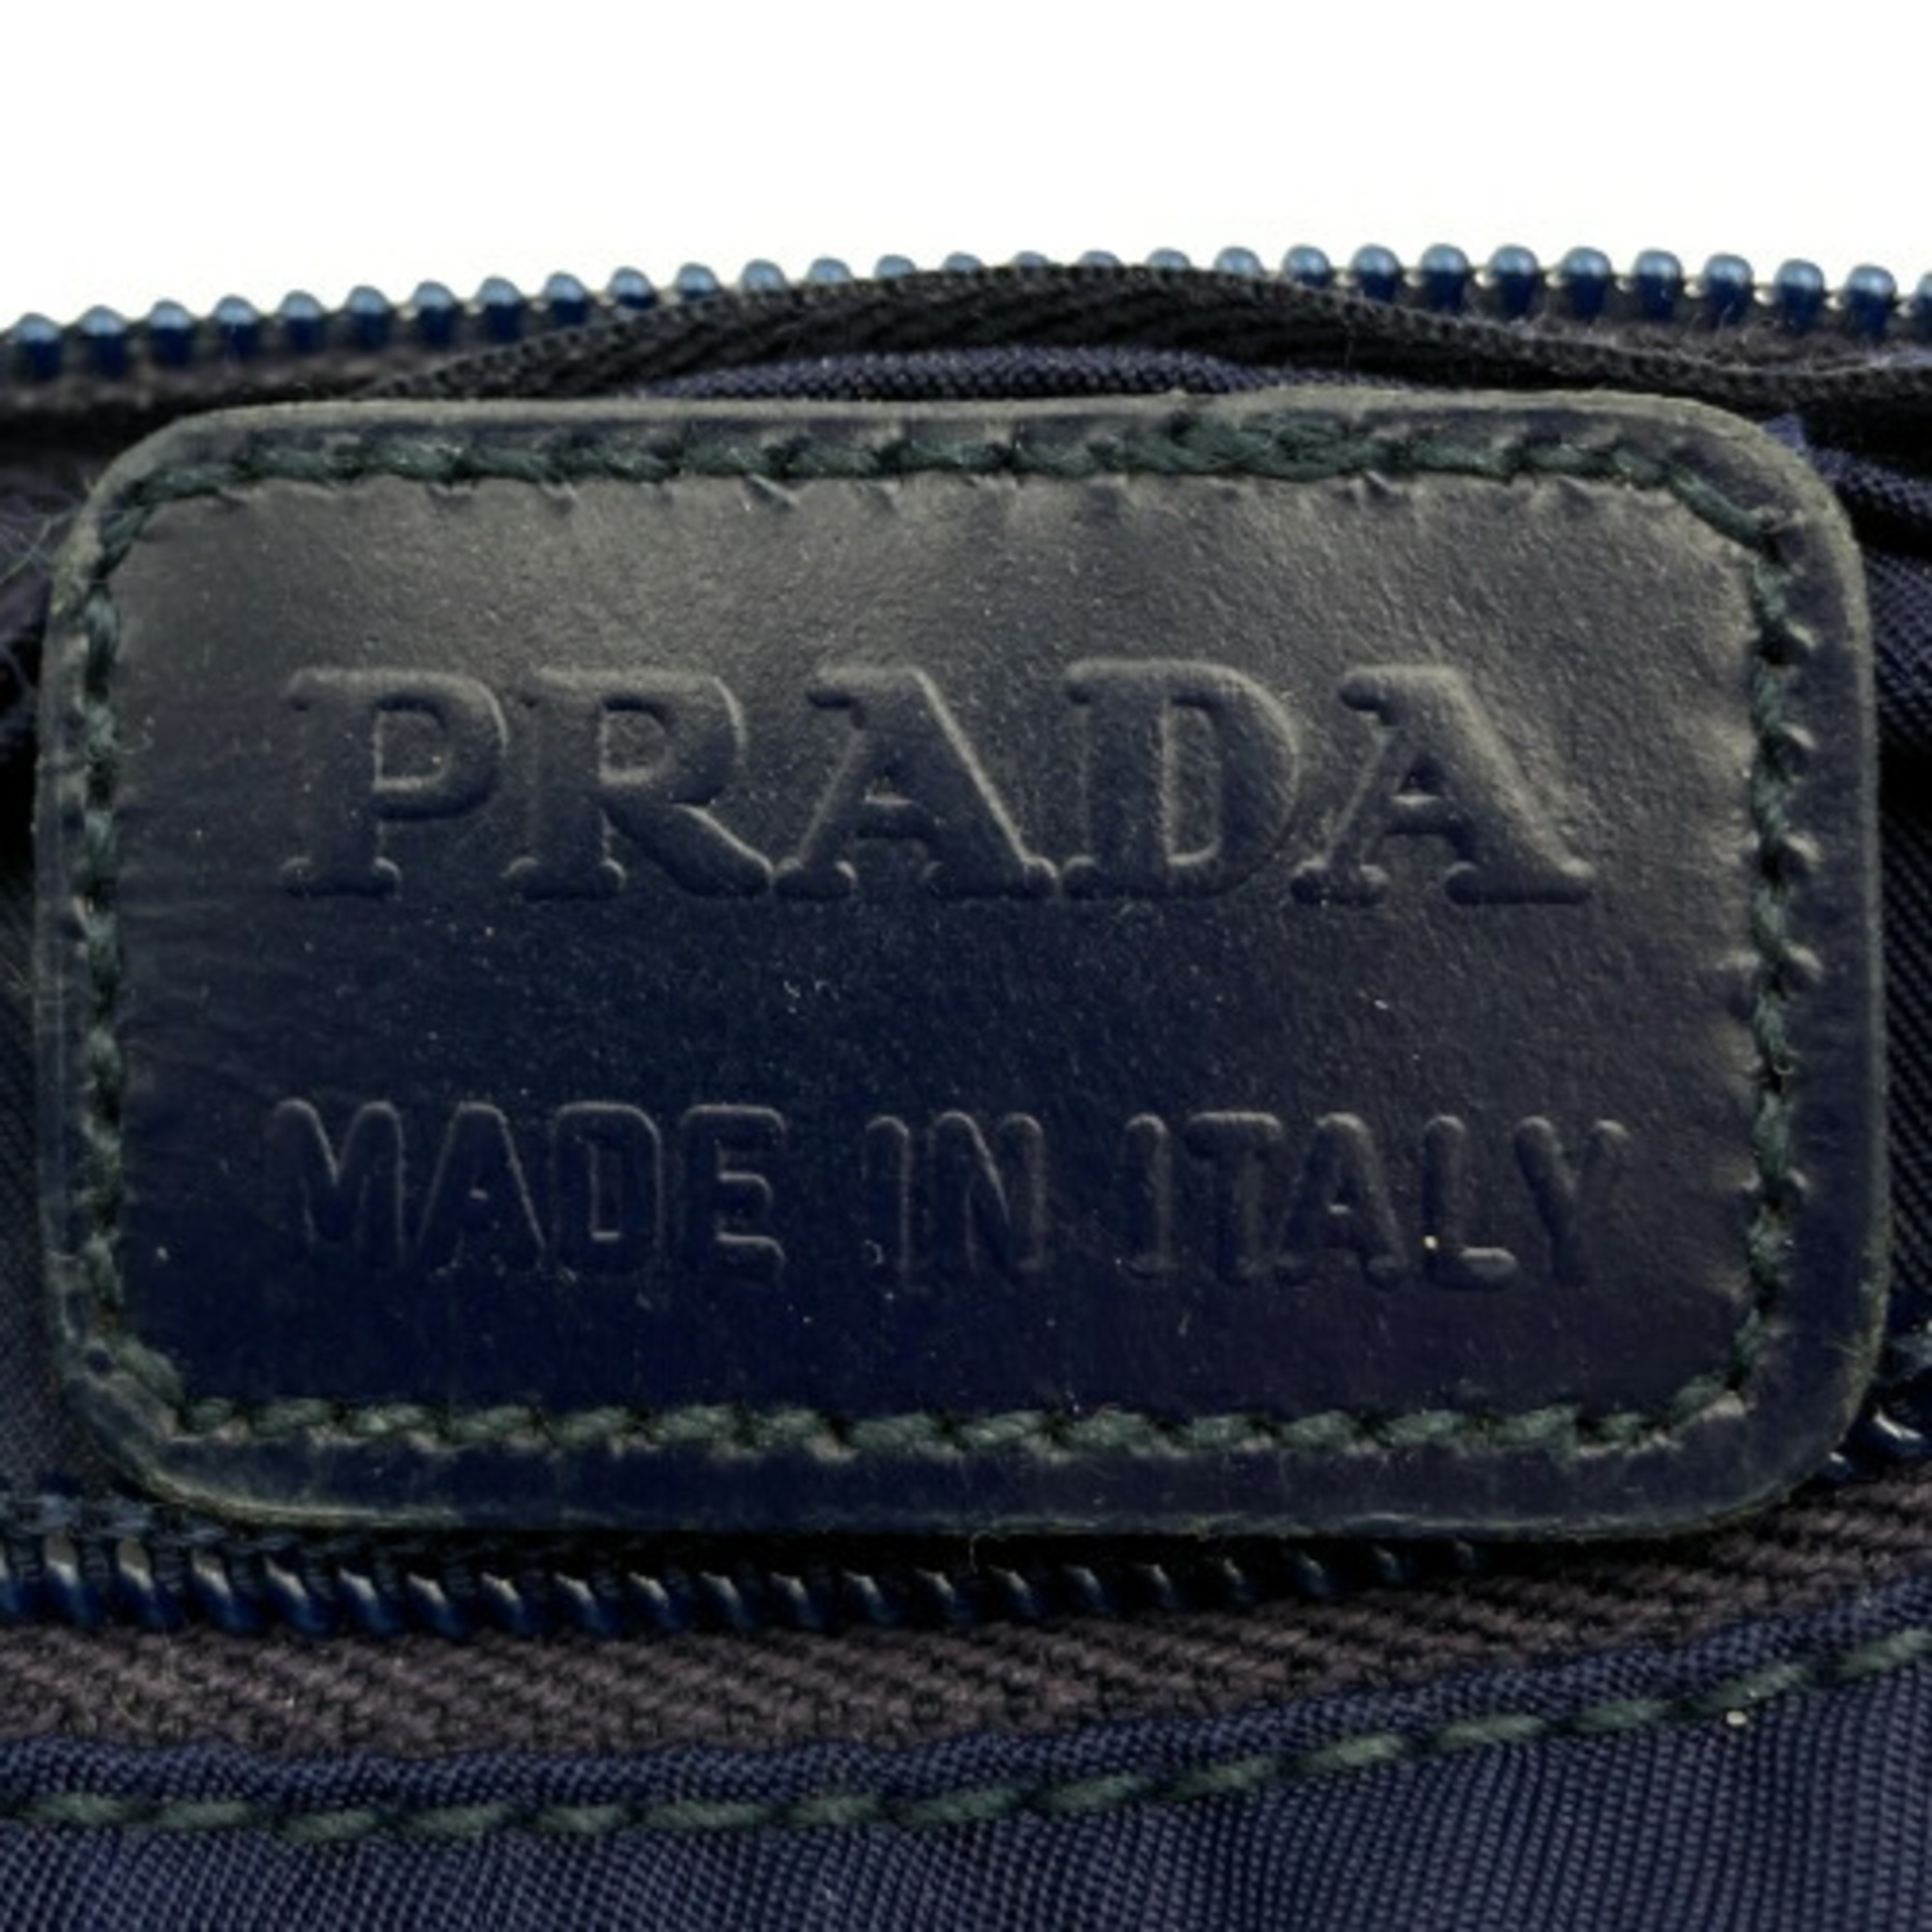 PRADA Prada Pouch Nylon Triangle Navy Ladies Men's Fashion Accessories USED IT9MYKITPKGO